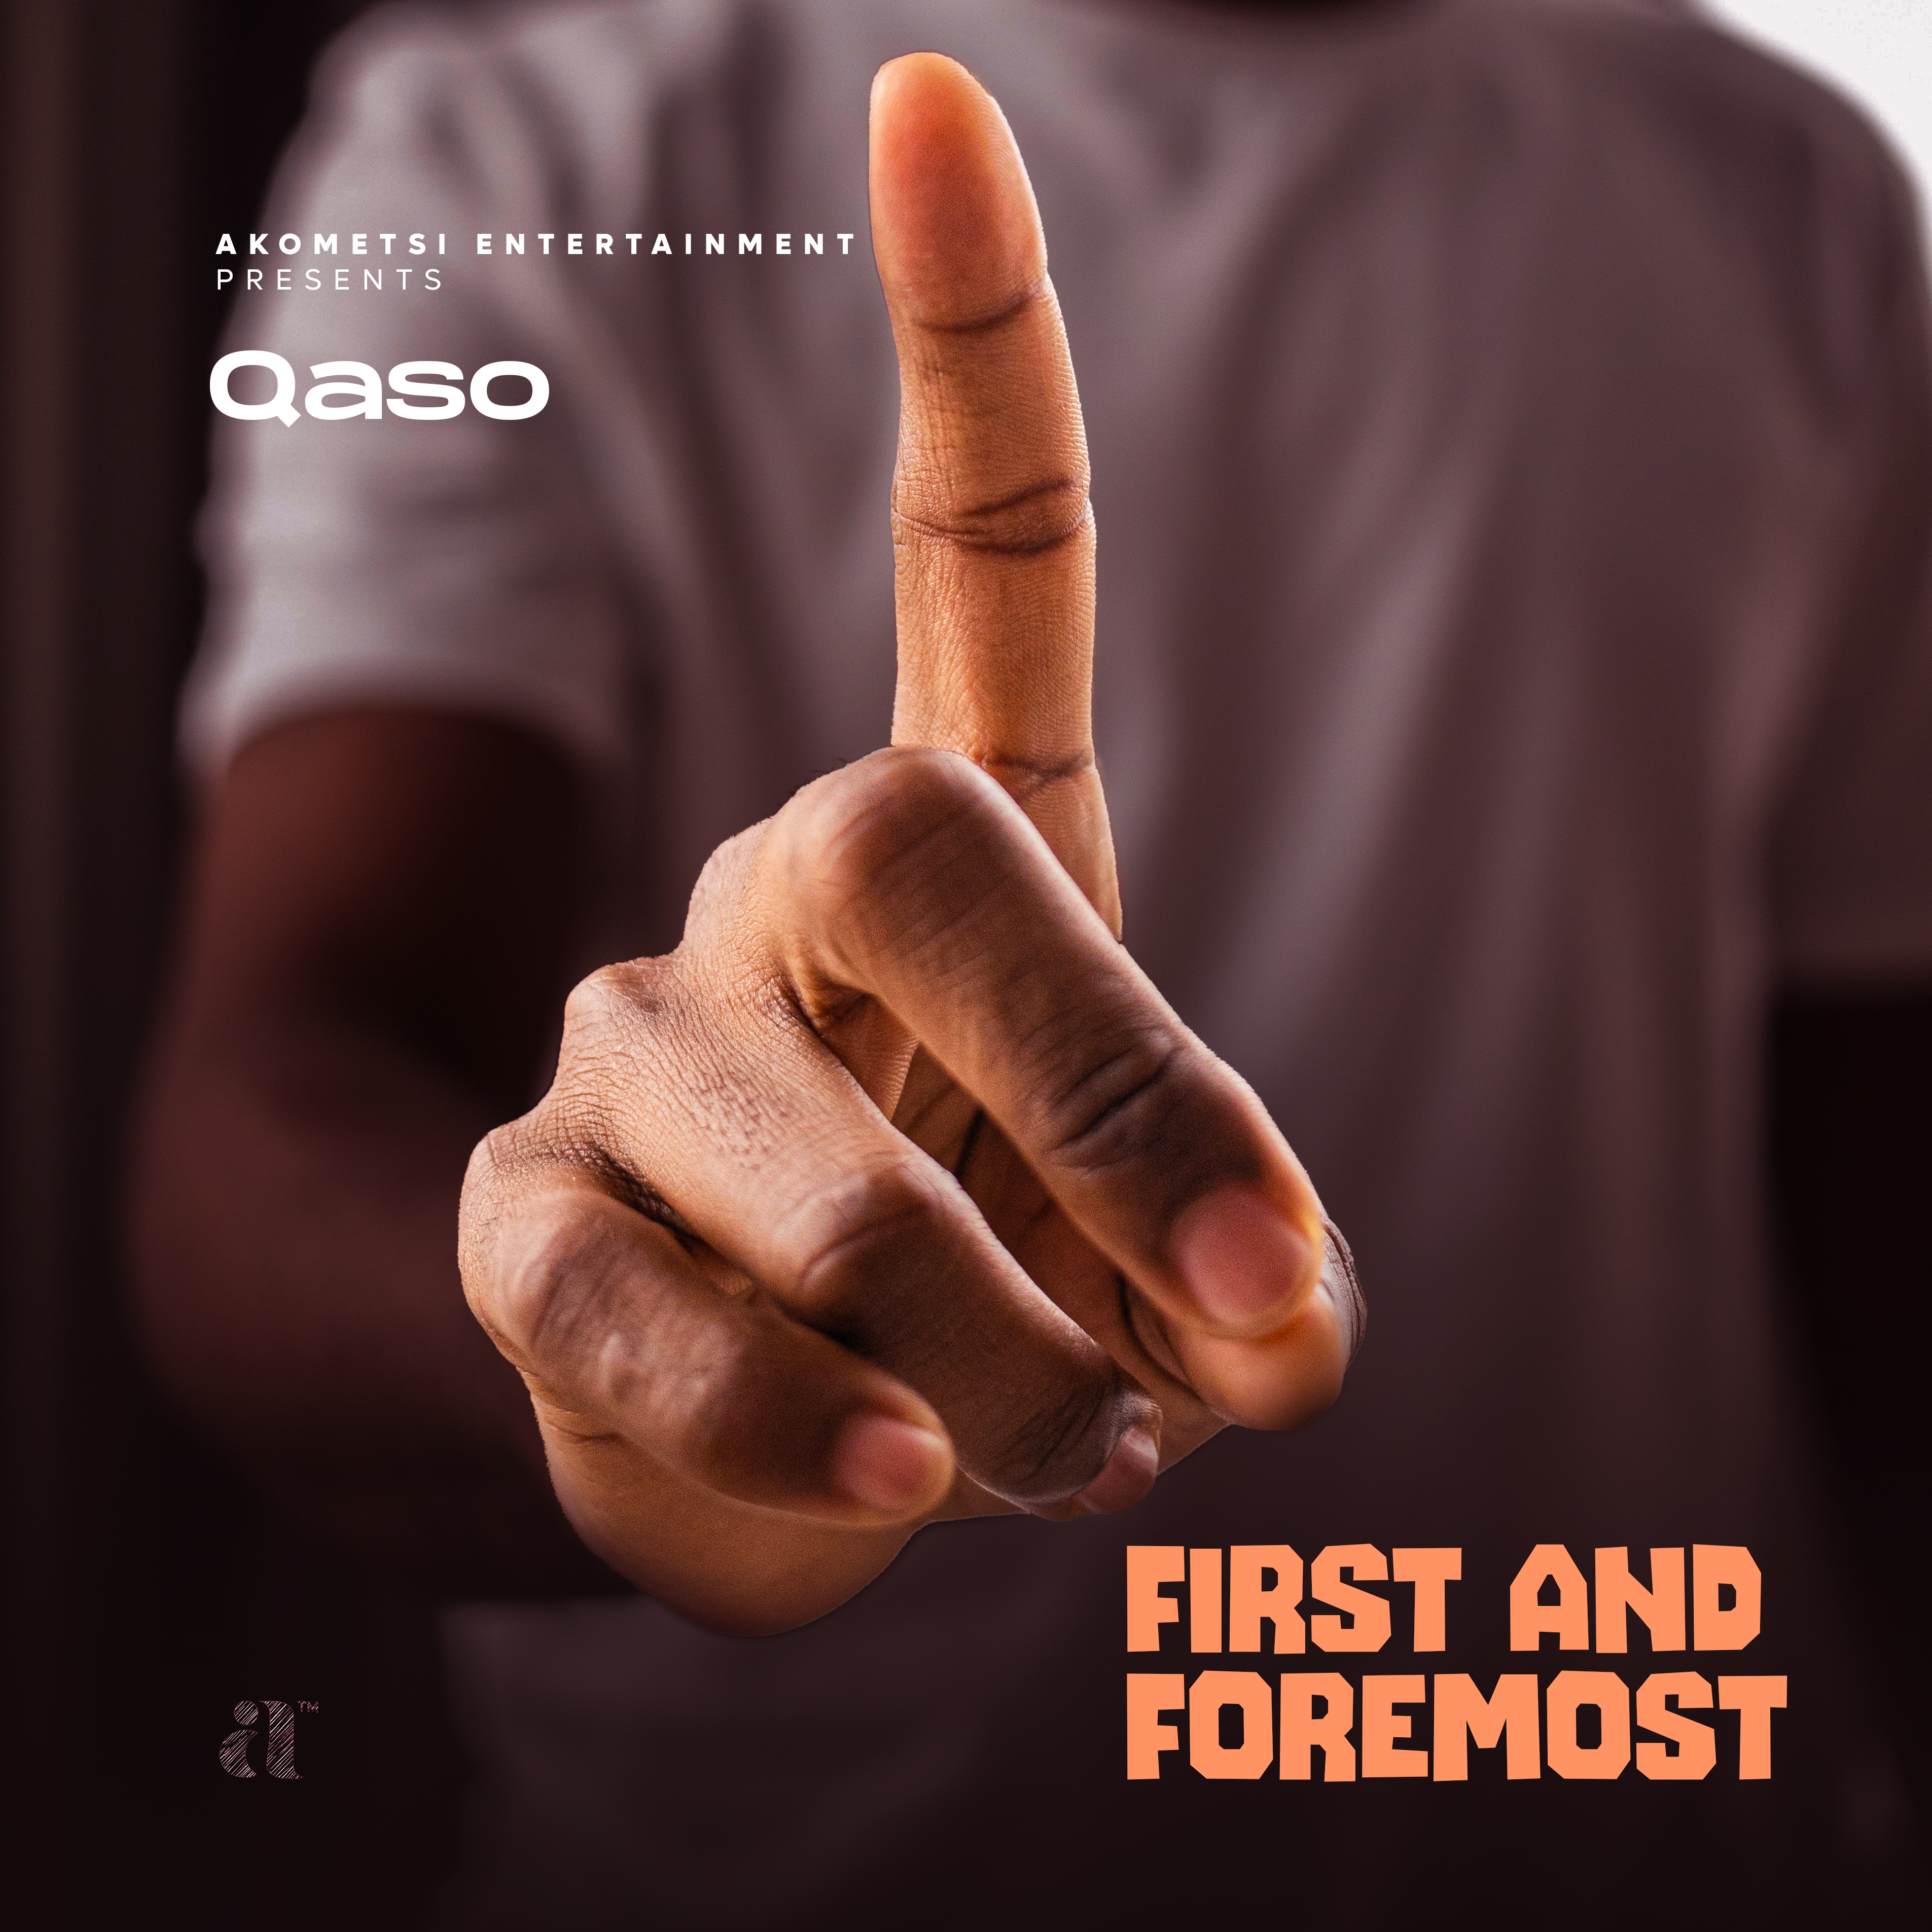 Qaso - First and Foremost by Akometsi Entertainment | Album